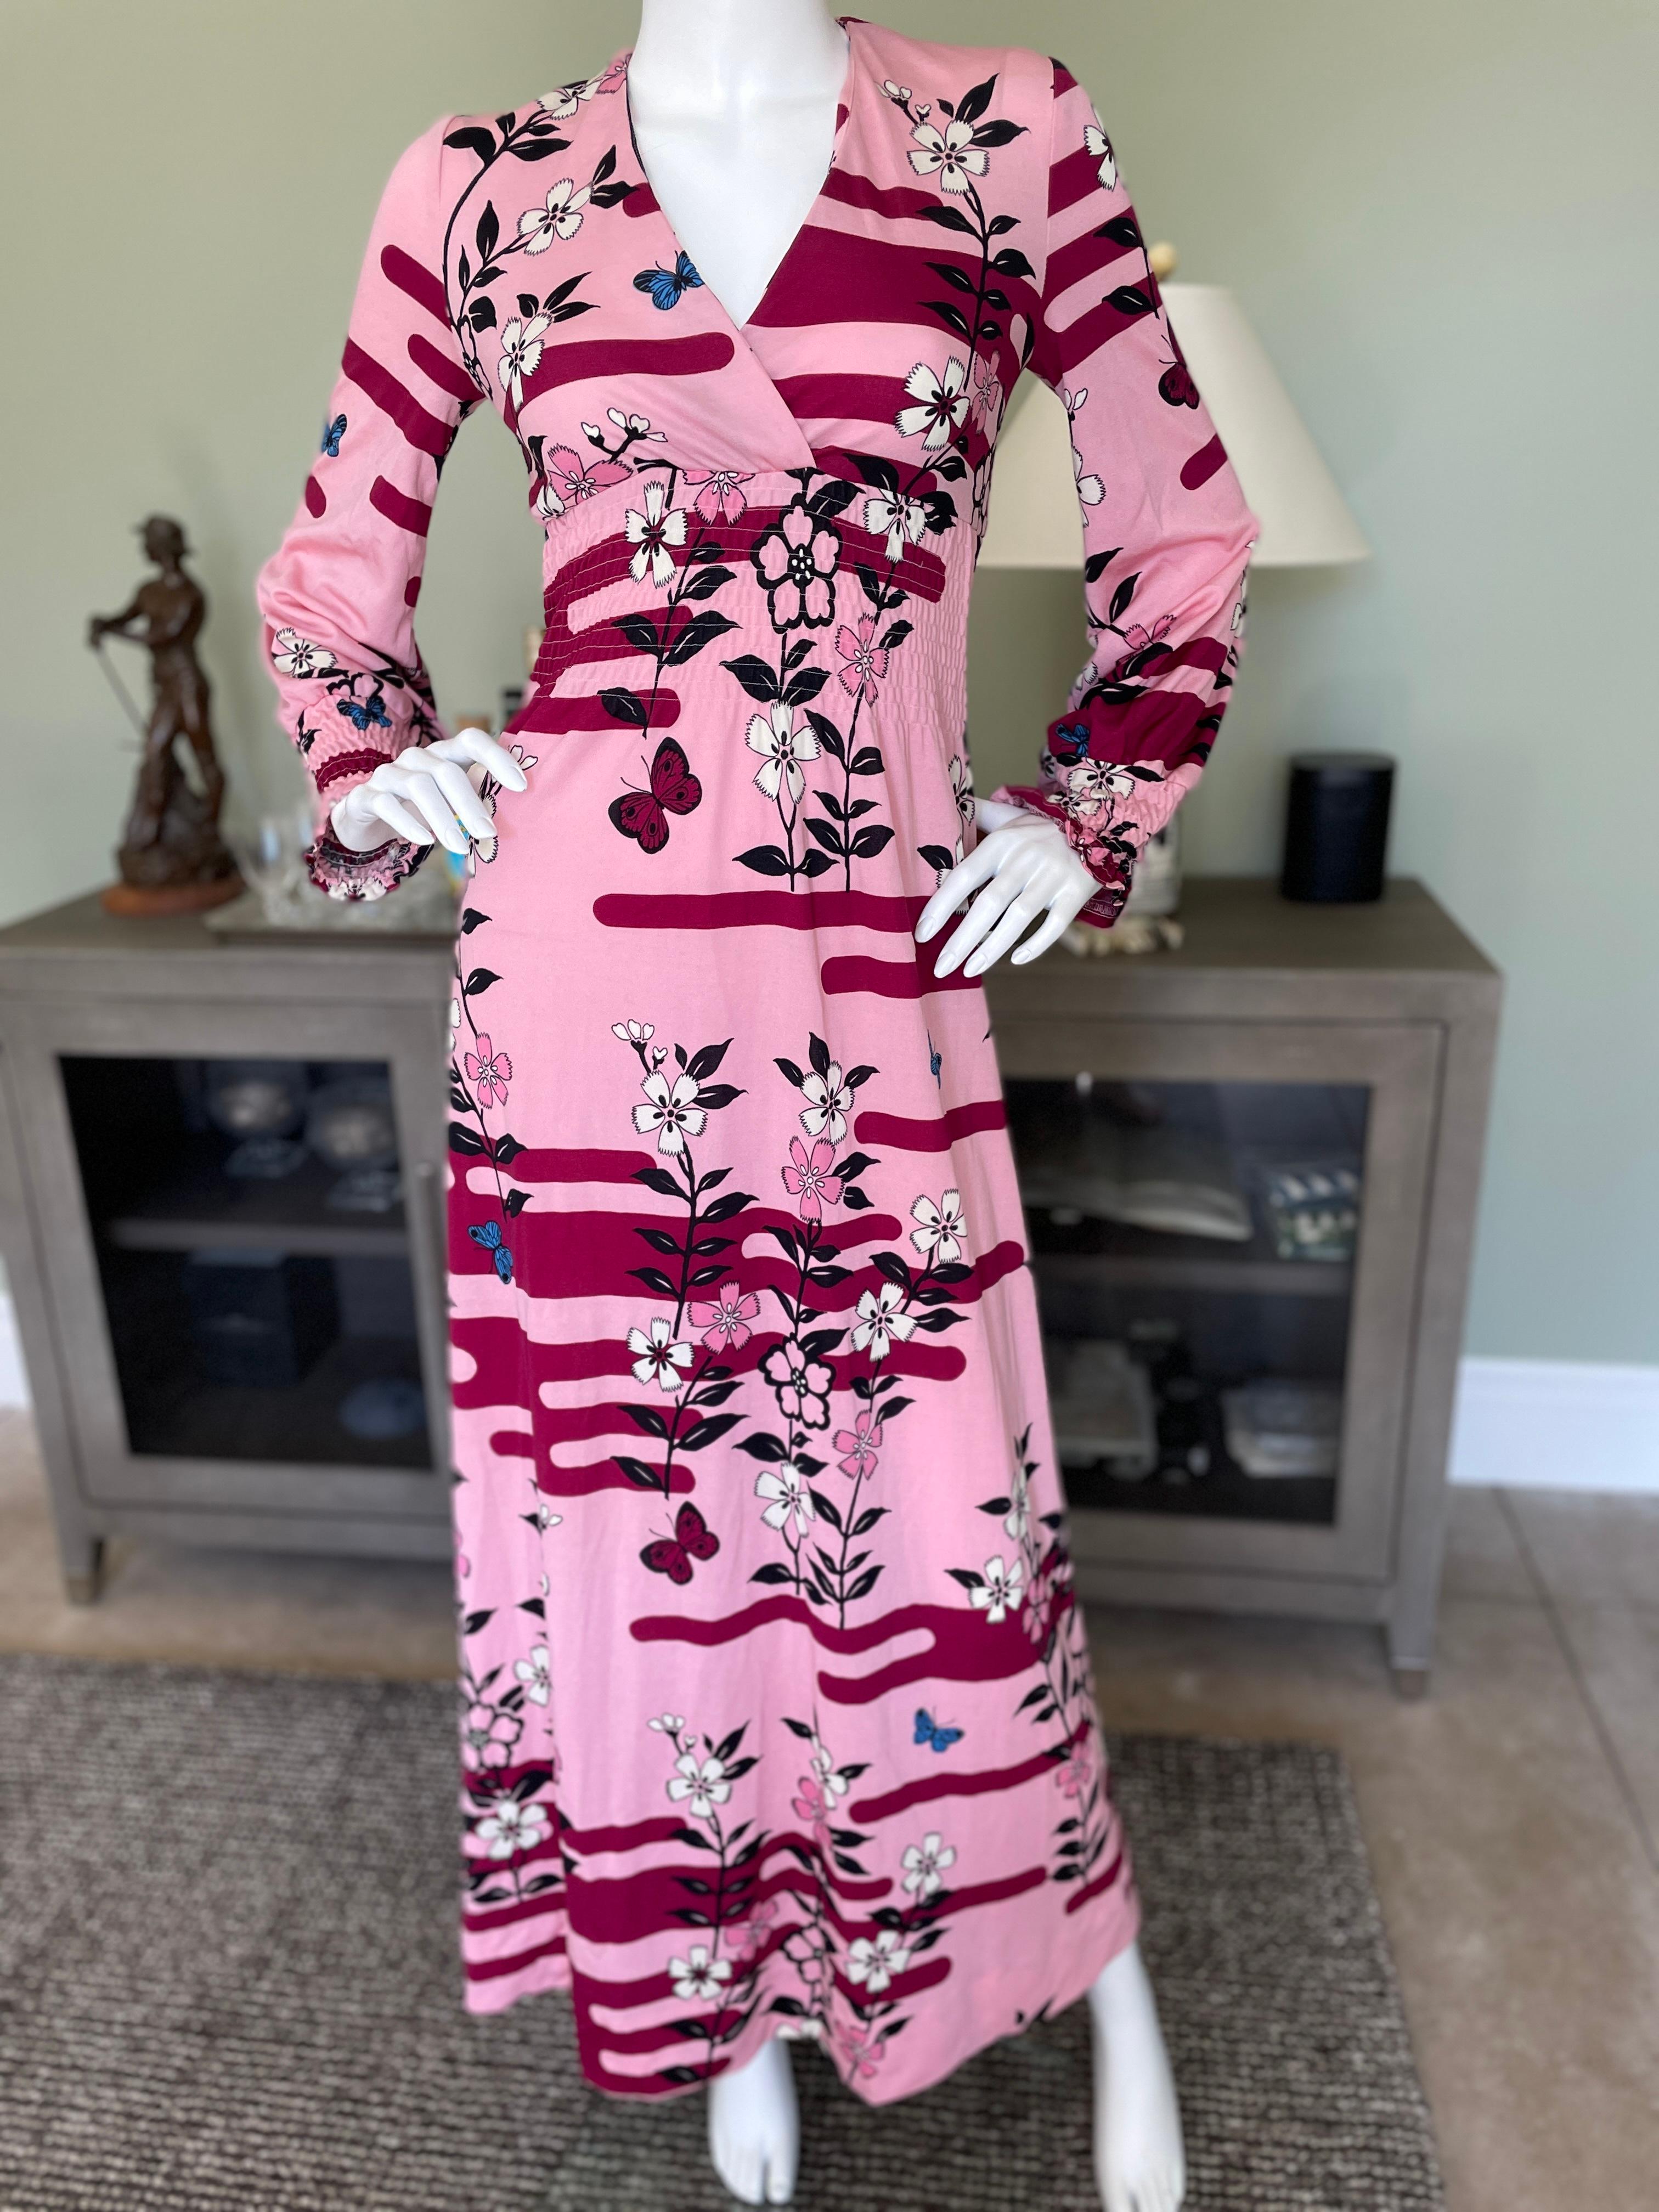 Hanae Mori Vintage Japanese Floral Pattern Pink Dress
Size L
Bust 38